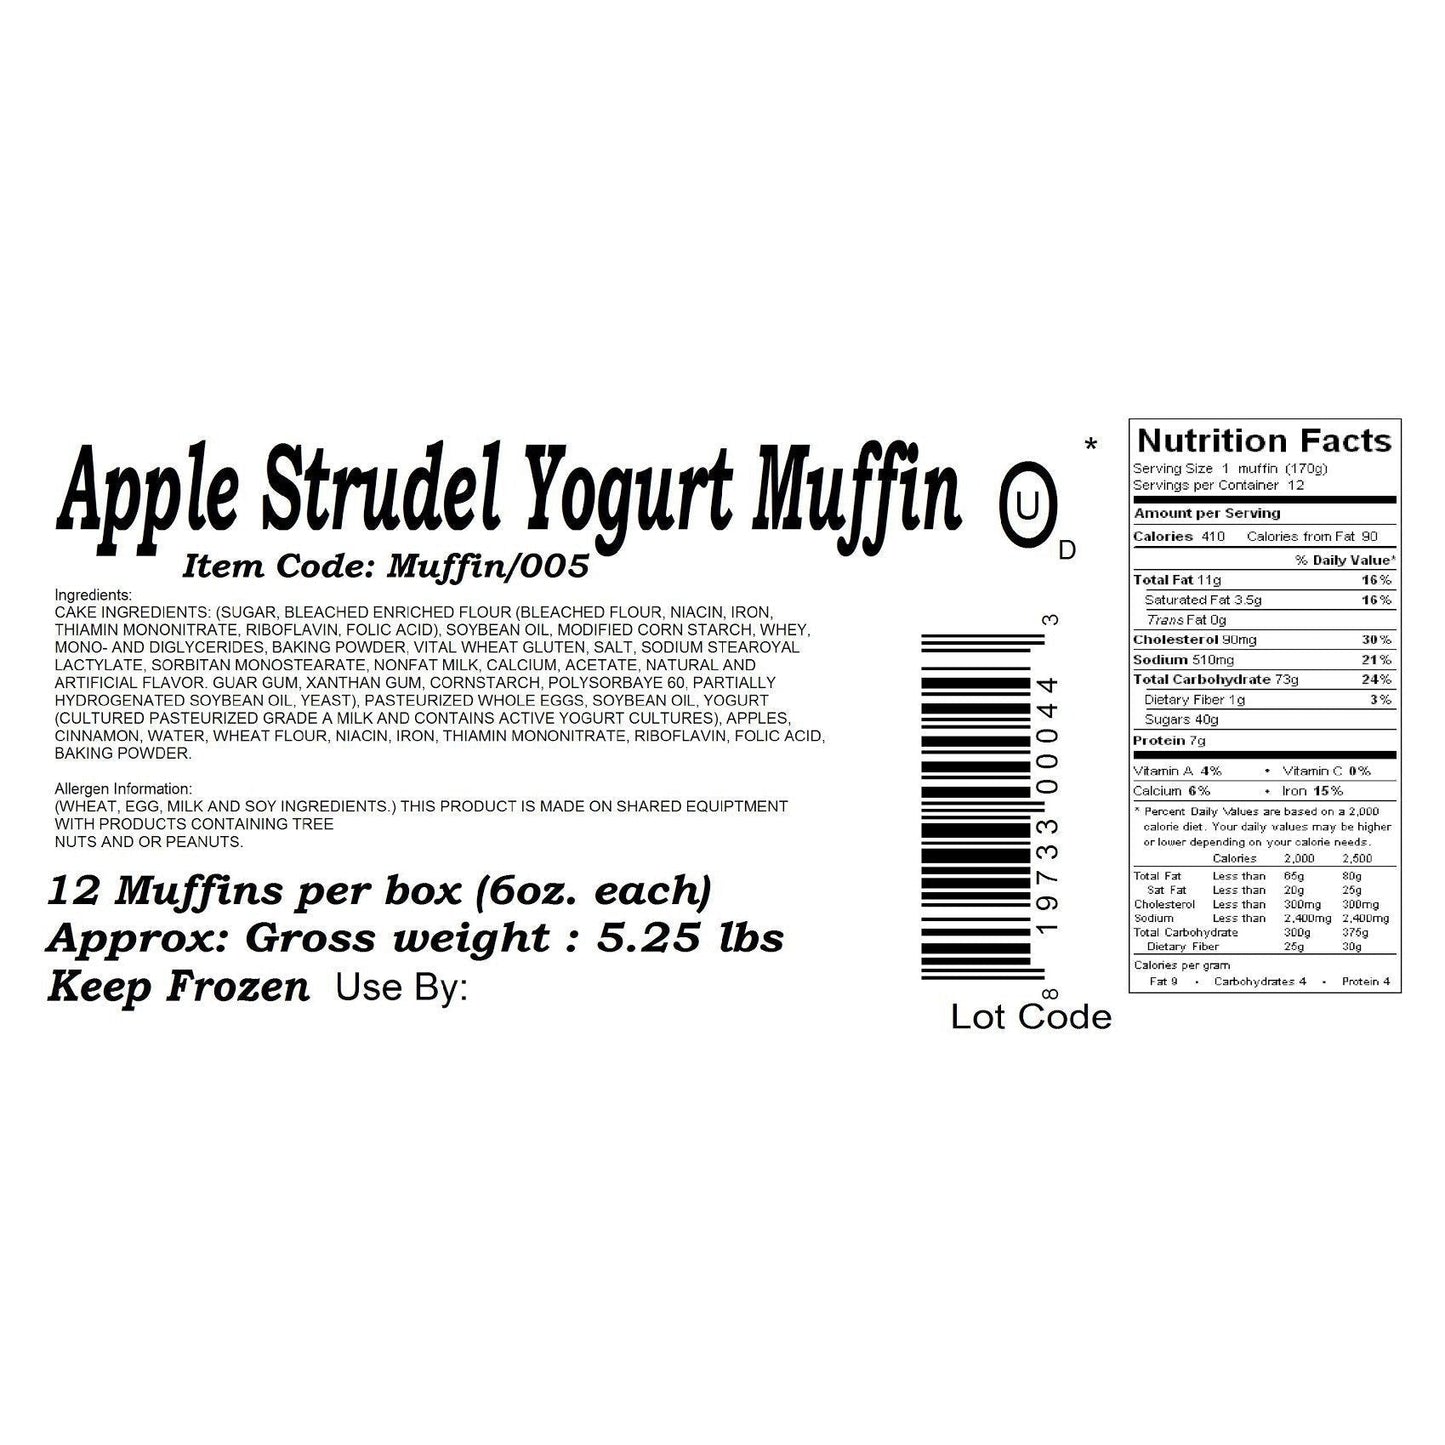 Apple Strudel Yogurt Muffins